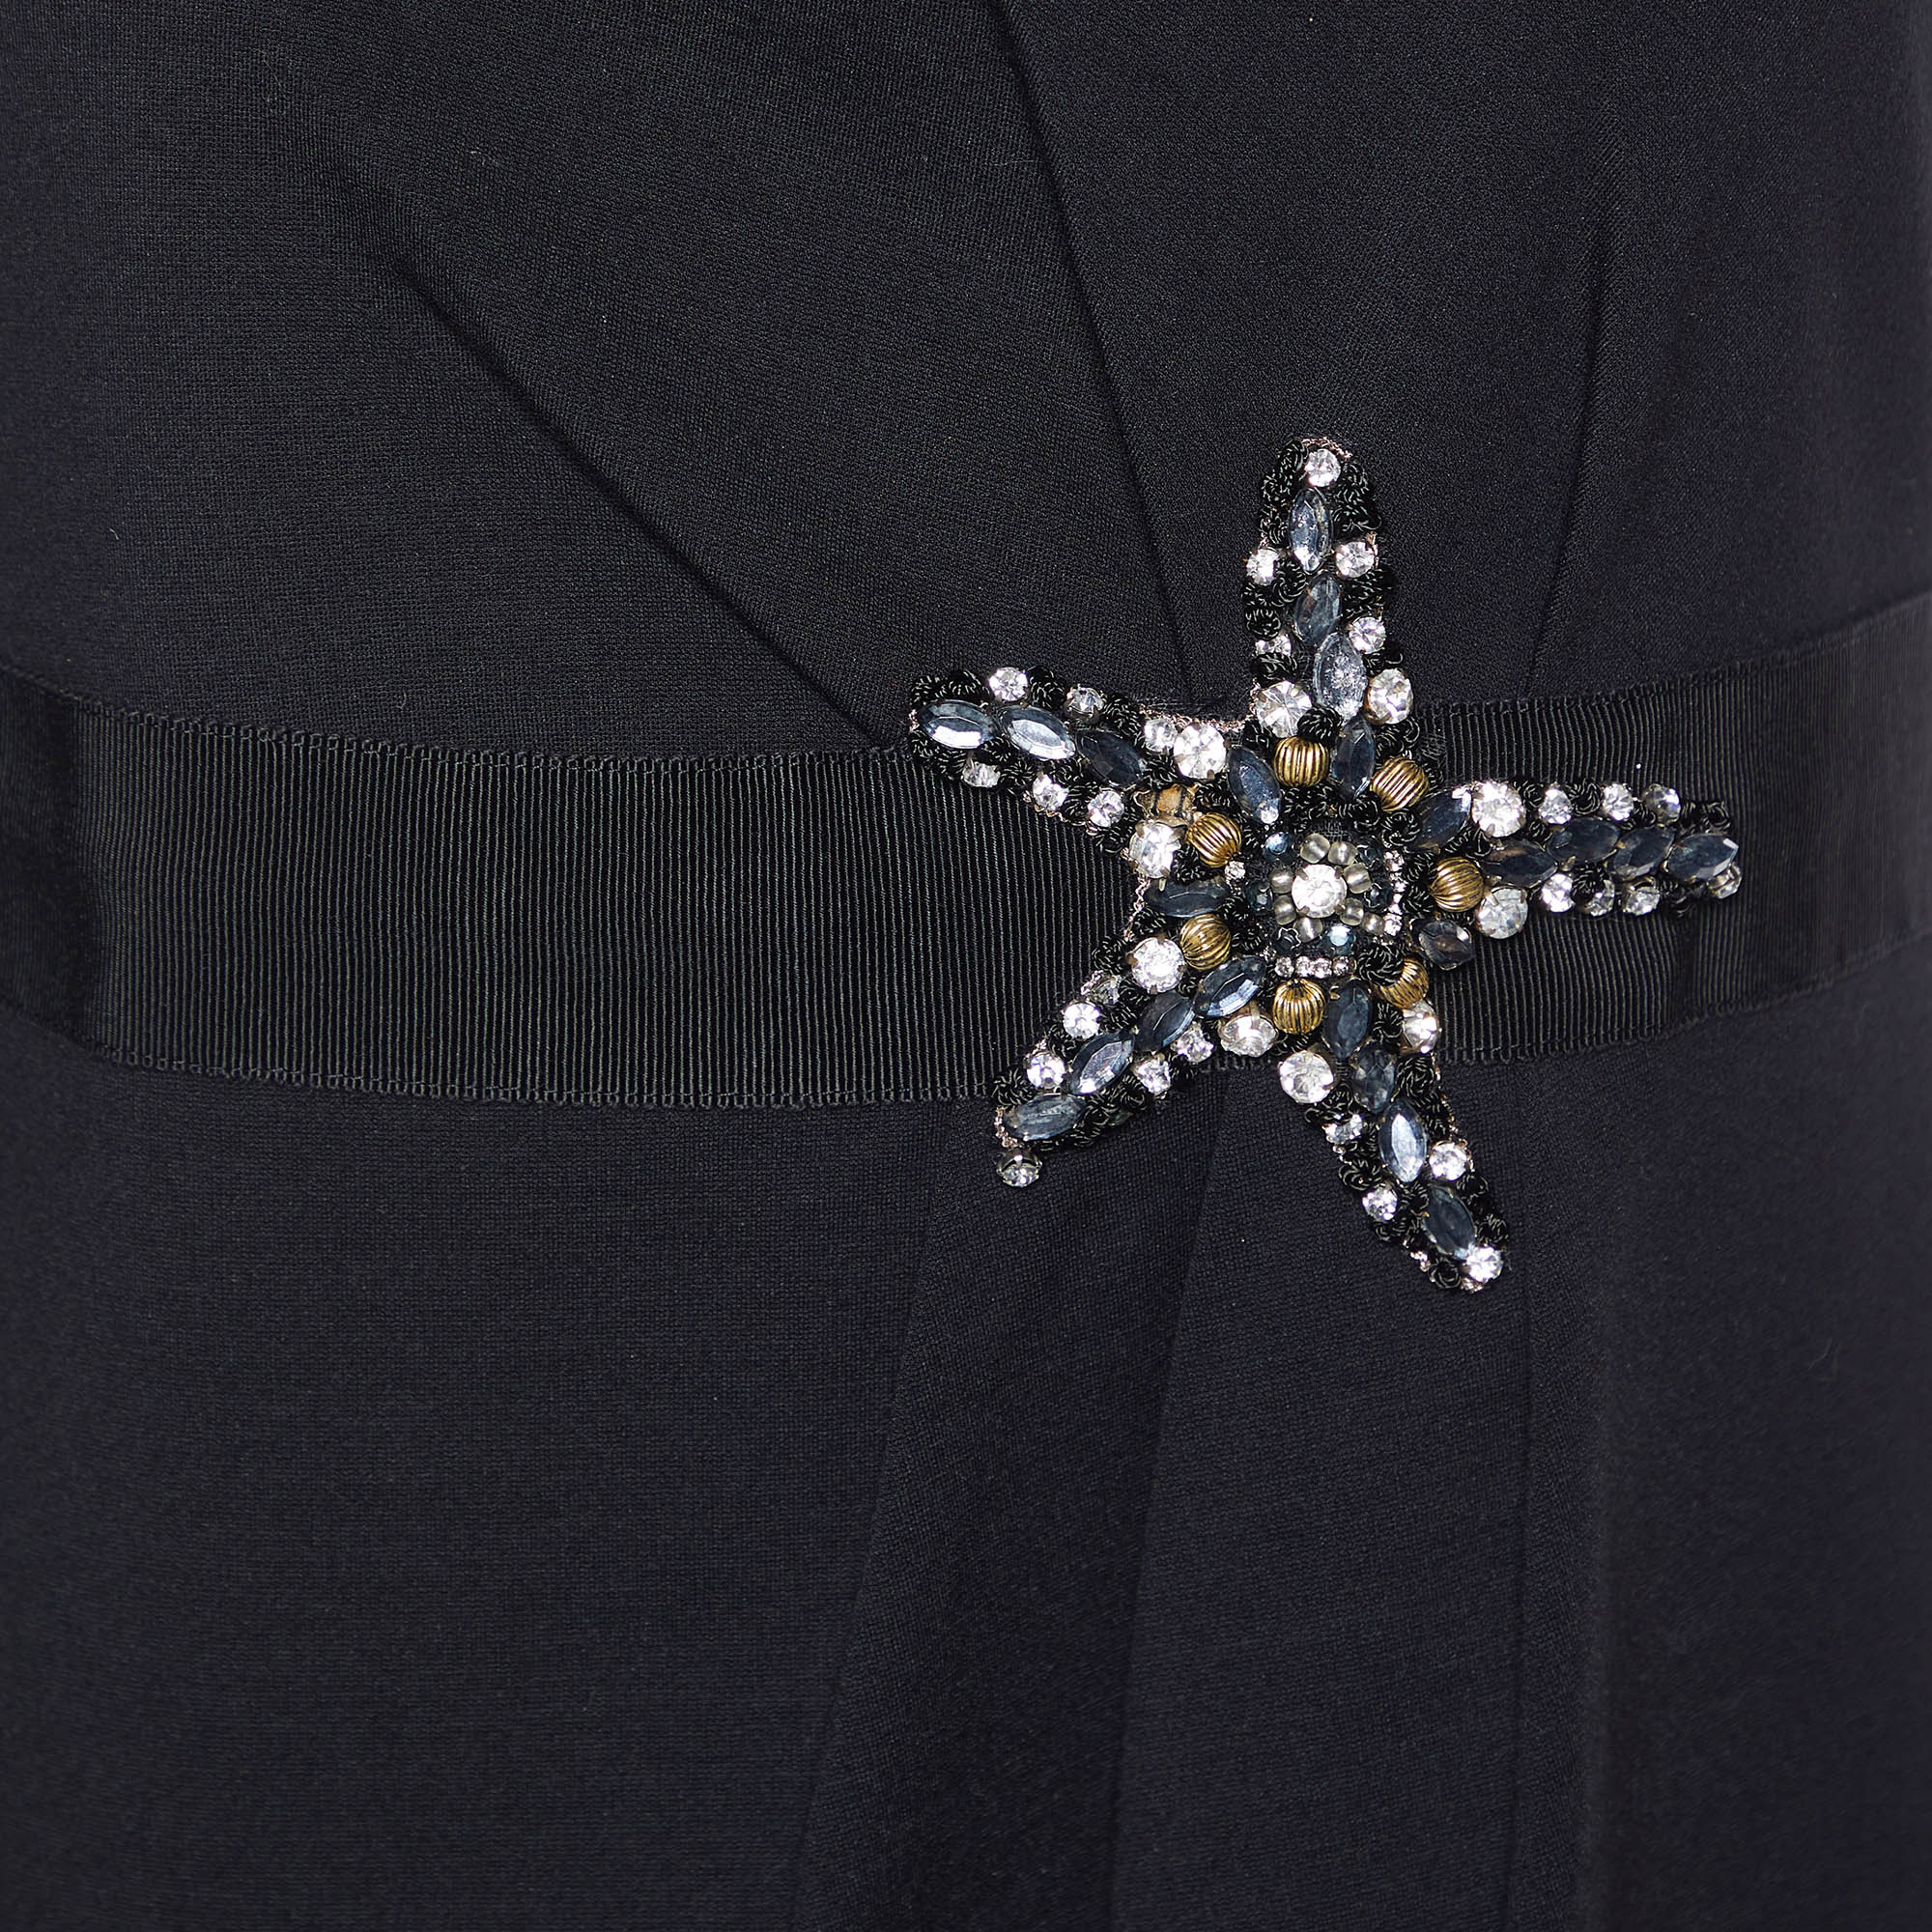 Cavalli Class Black Cotton Knit Star Embellished Sleeveless Sheath Dress M